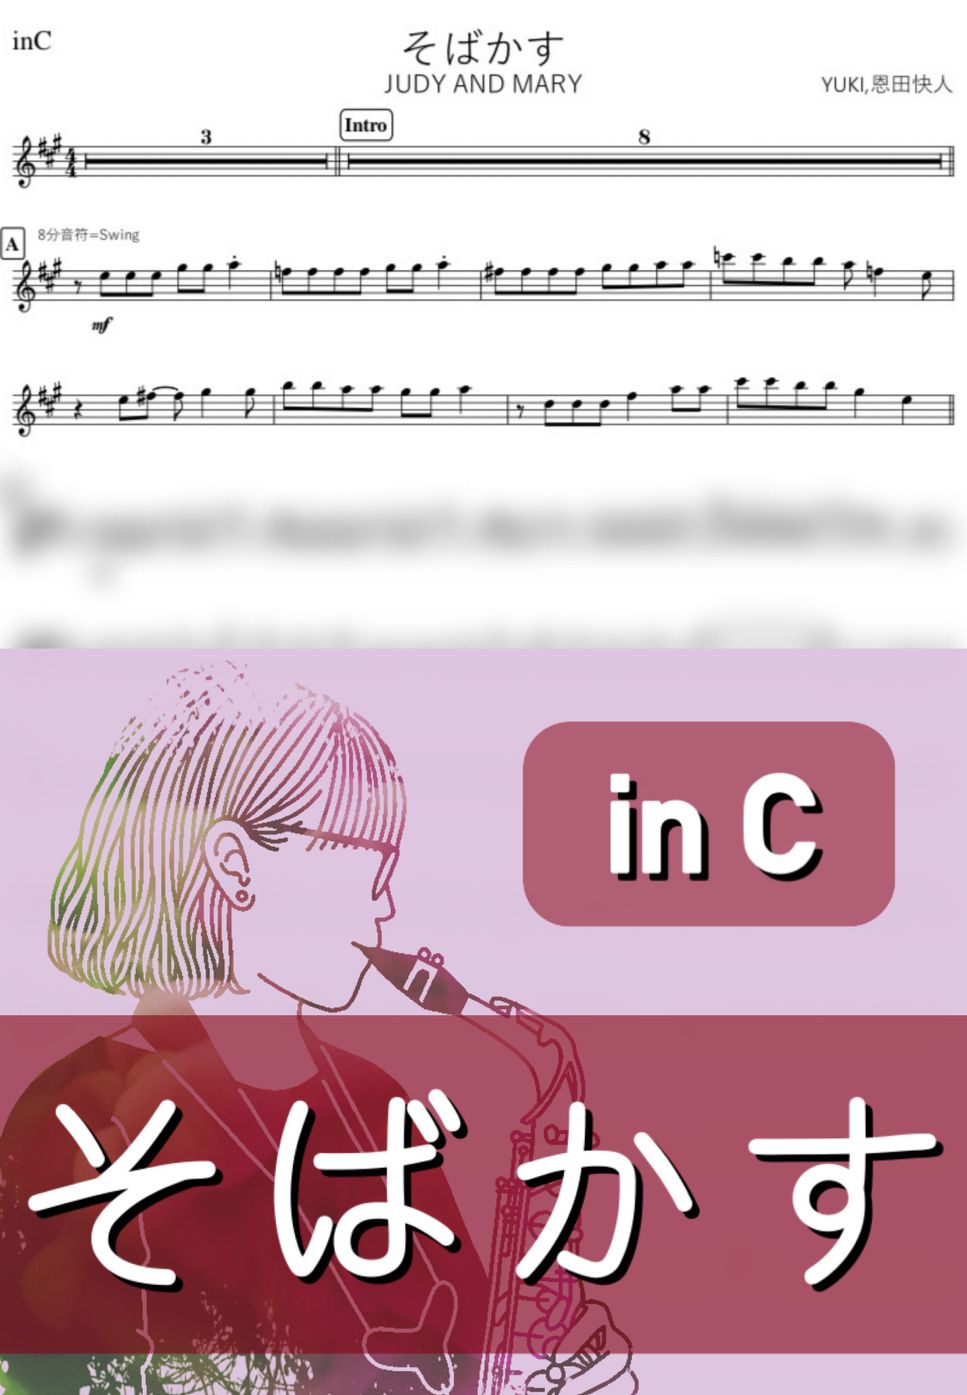 JUDY AND MARY - そばかす (C) by kanamusic